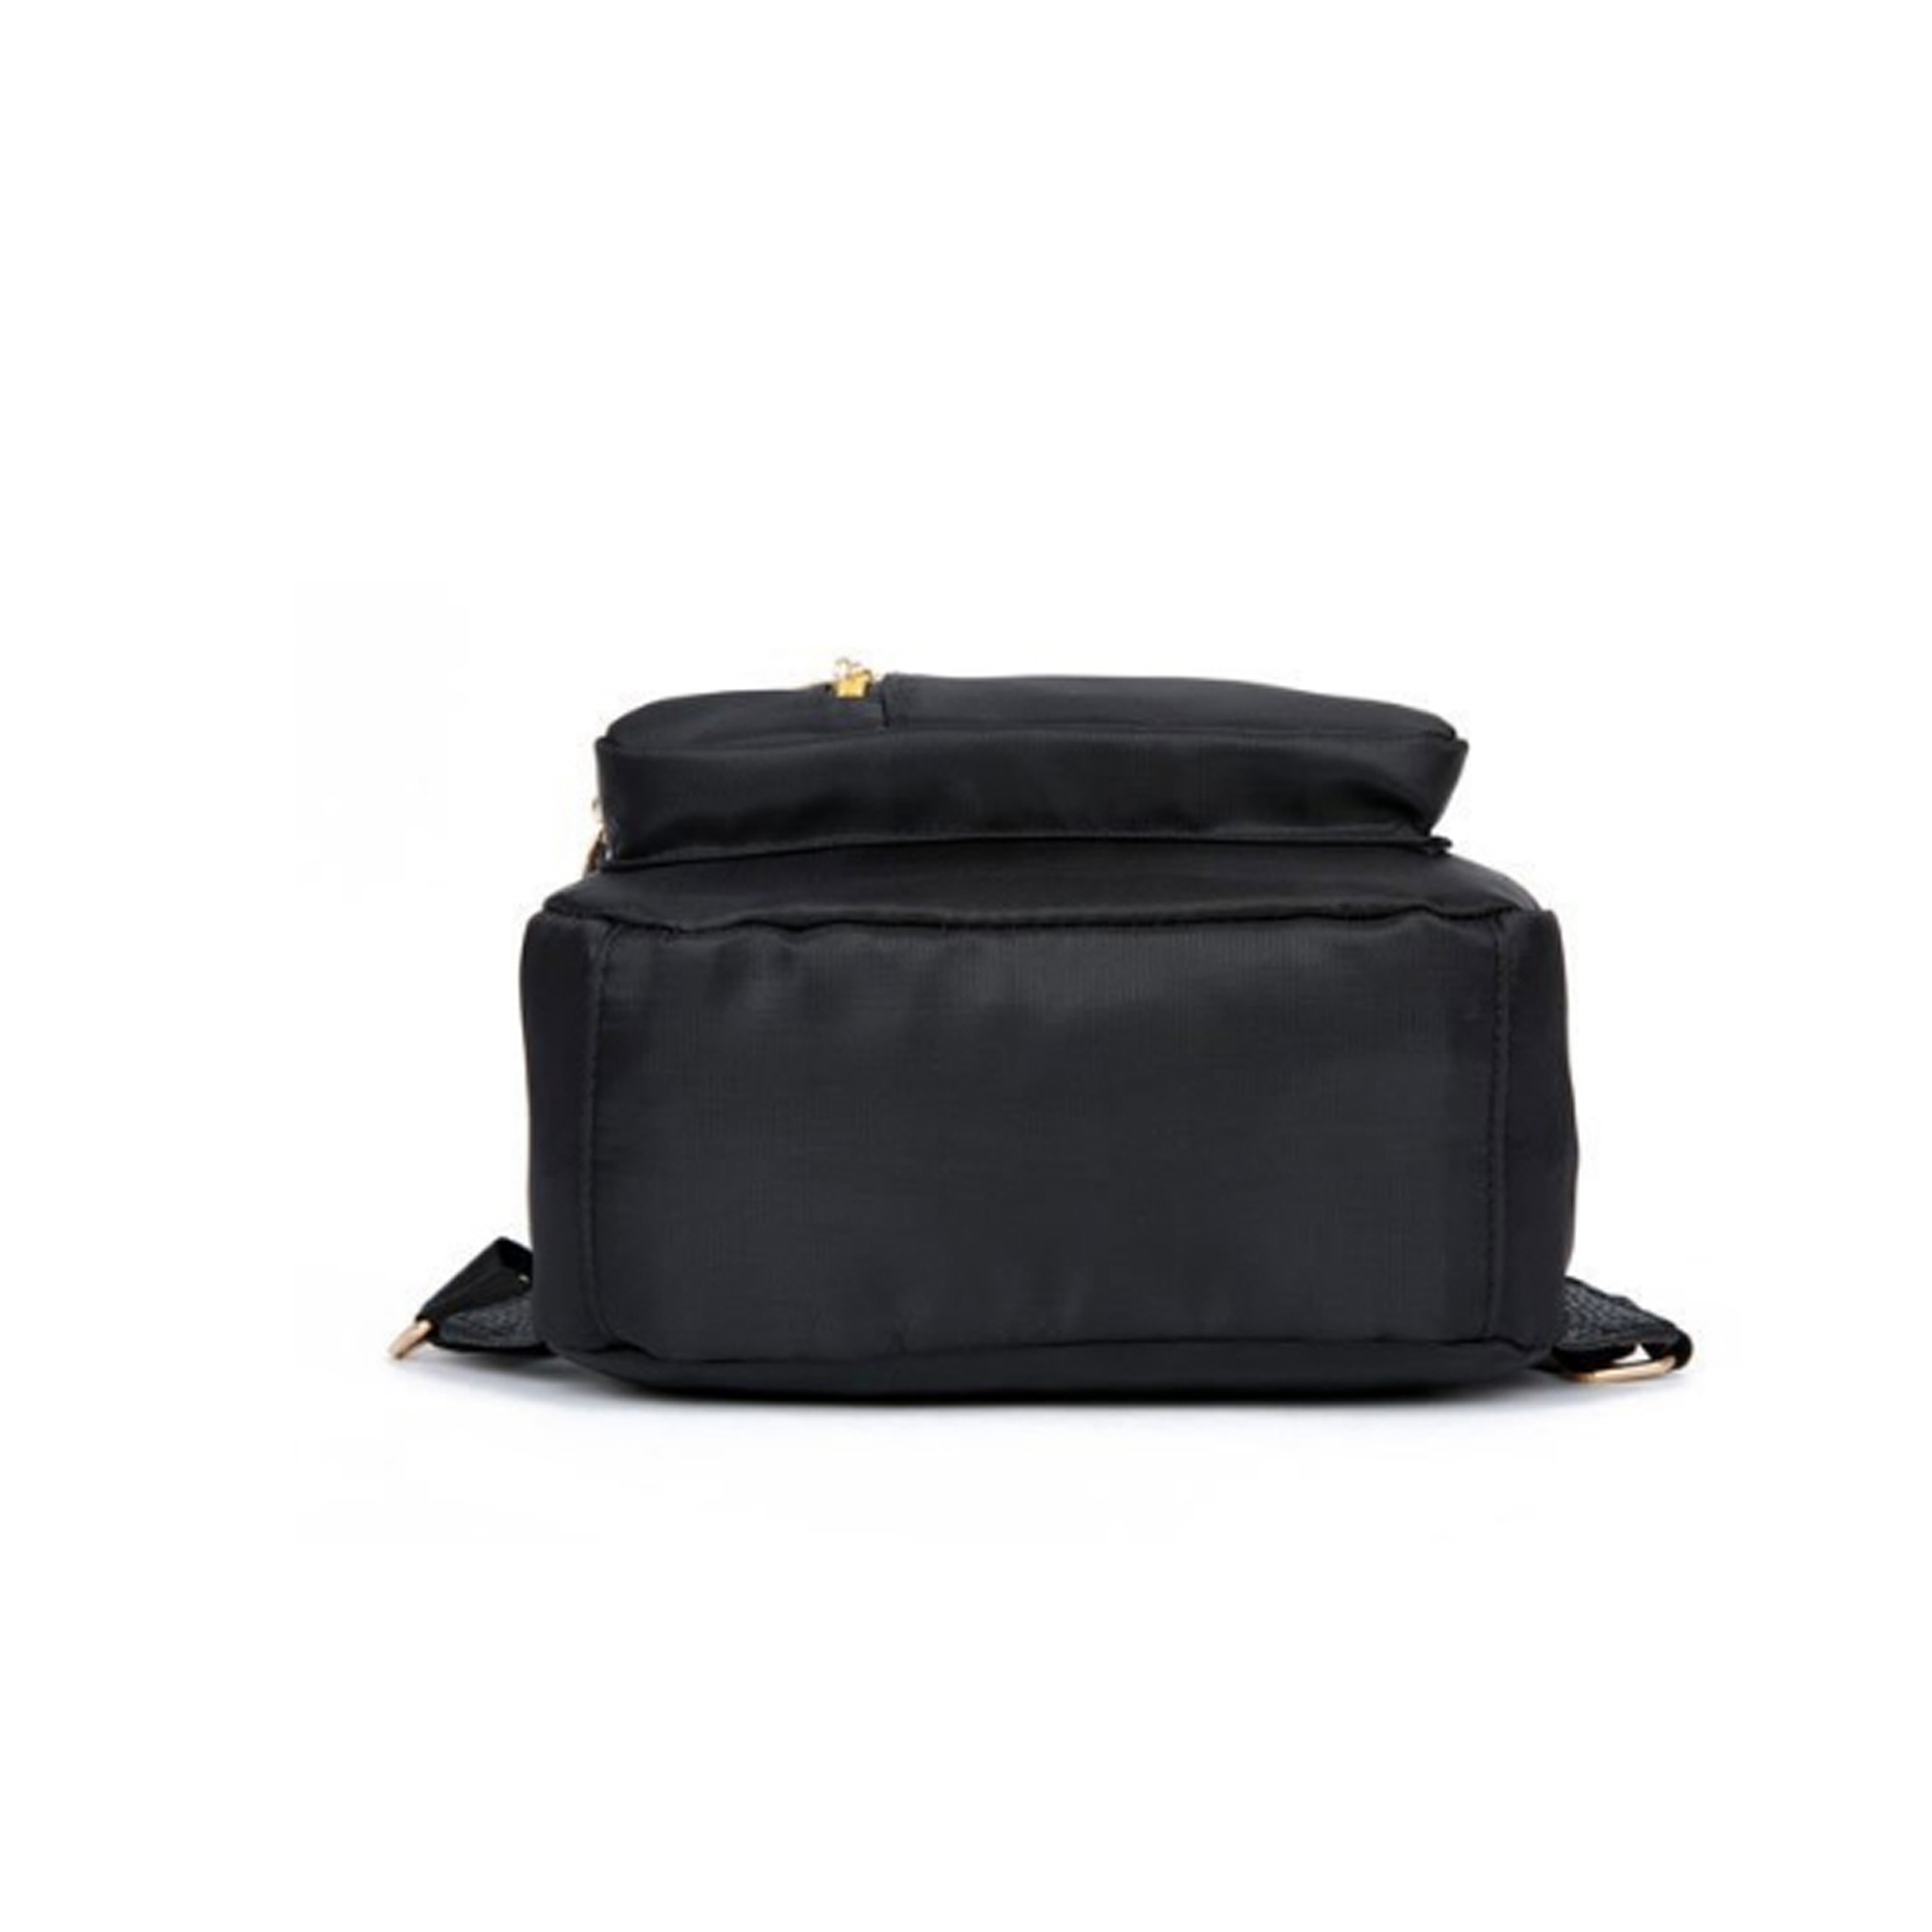 Hirigin Women Girls Black Nylon Mini Backpack Travel School Backpack Shoulder Bags - image 3 of 6